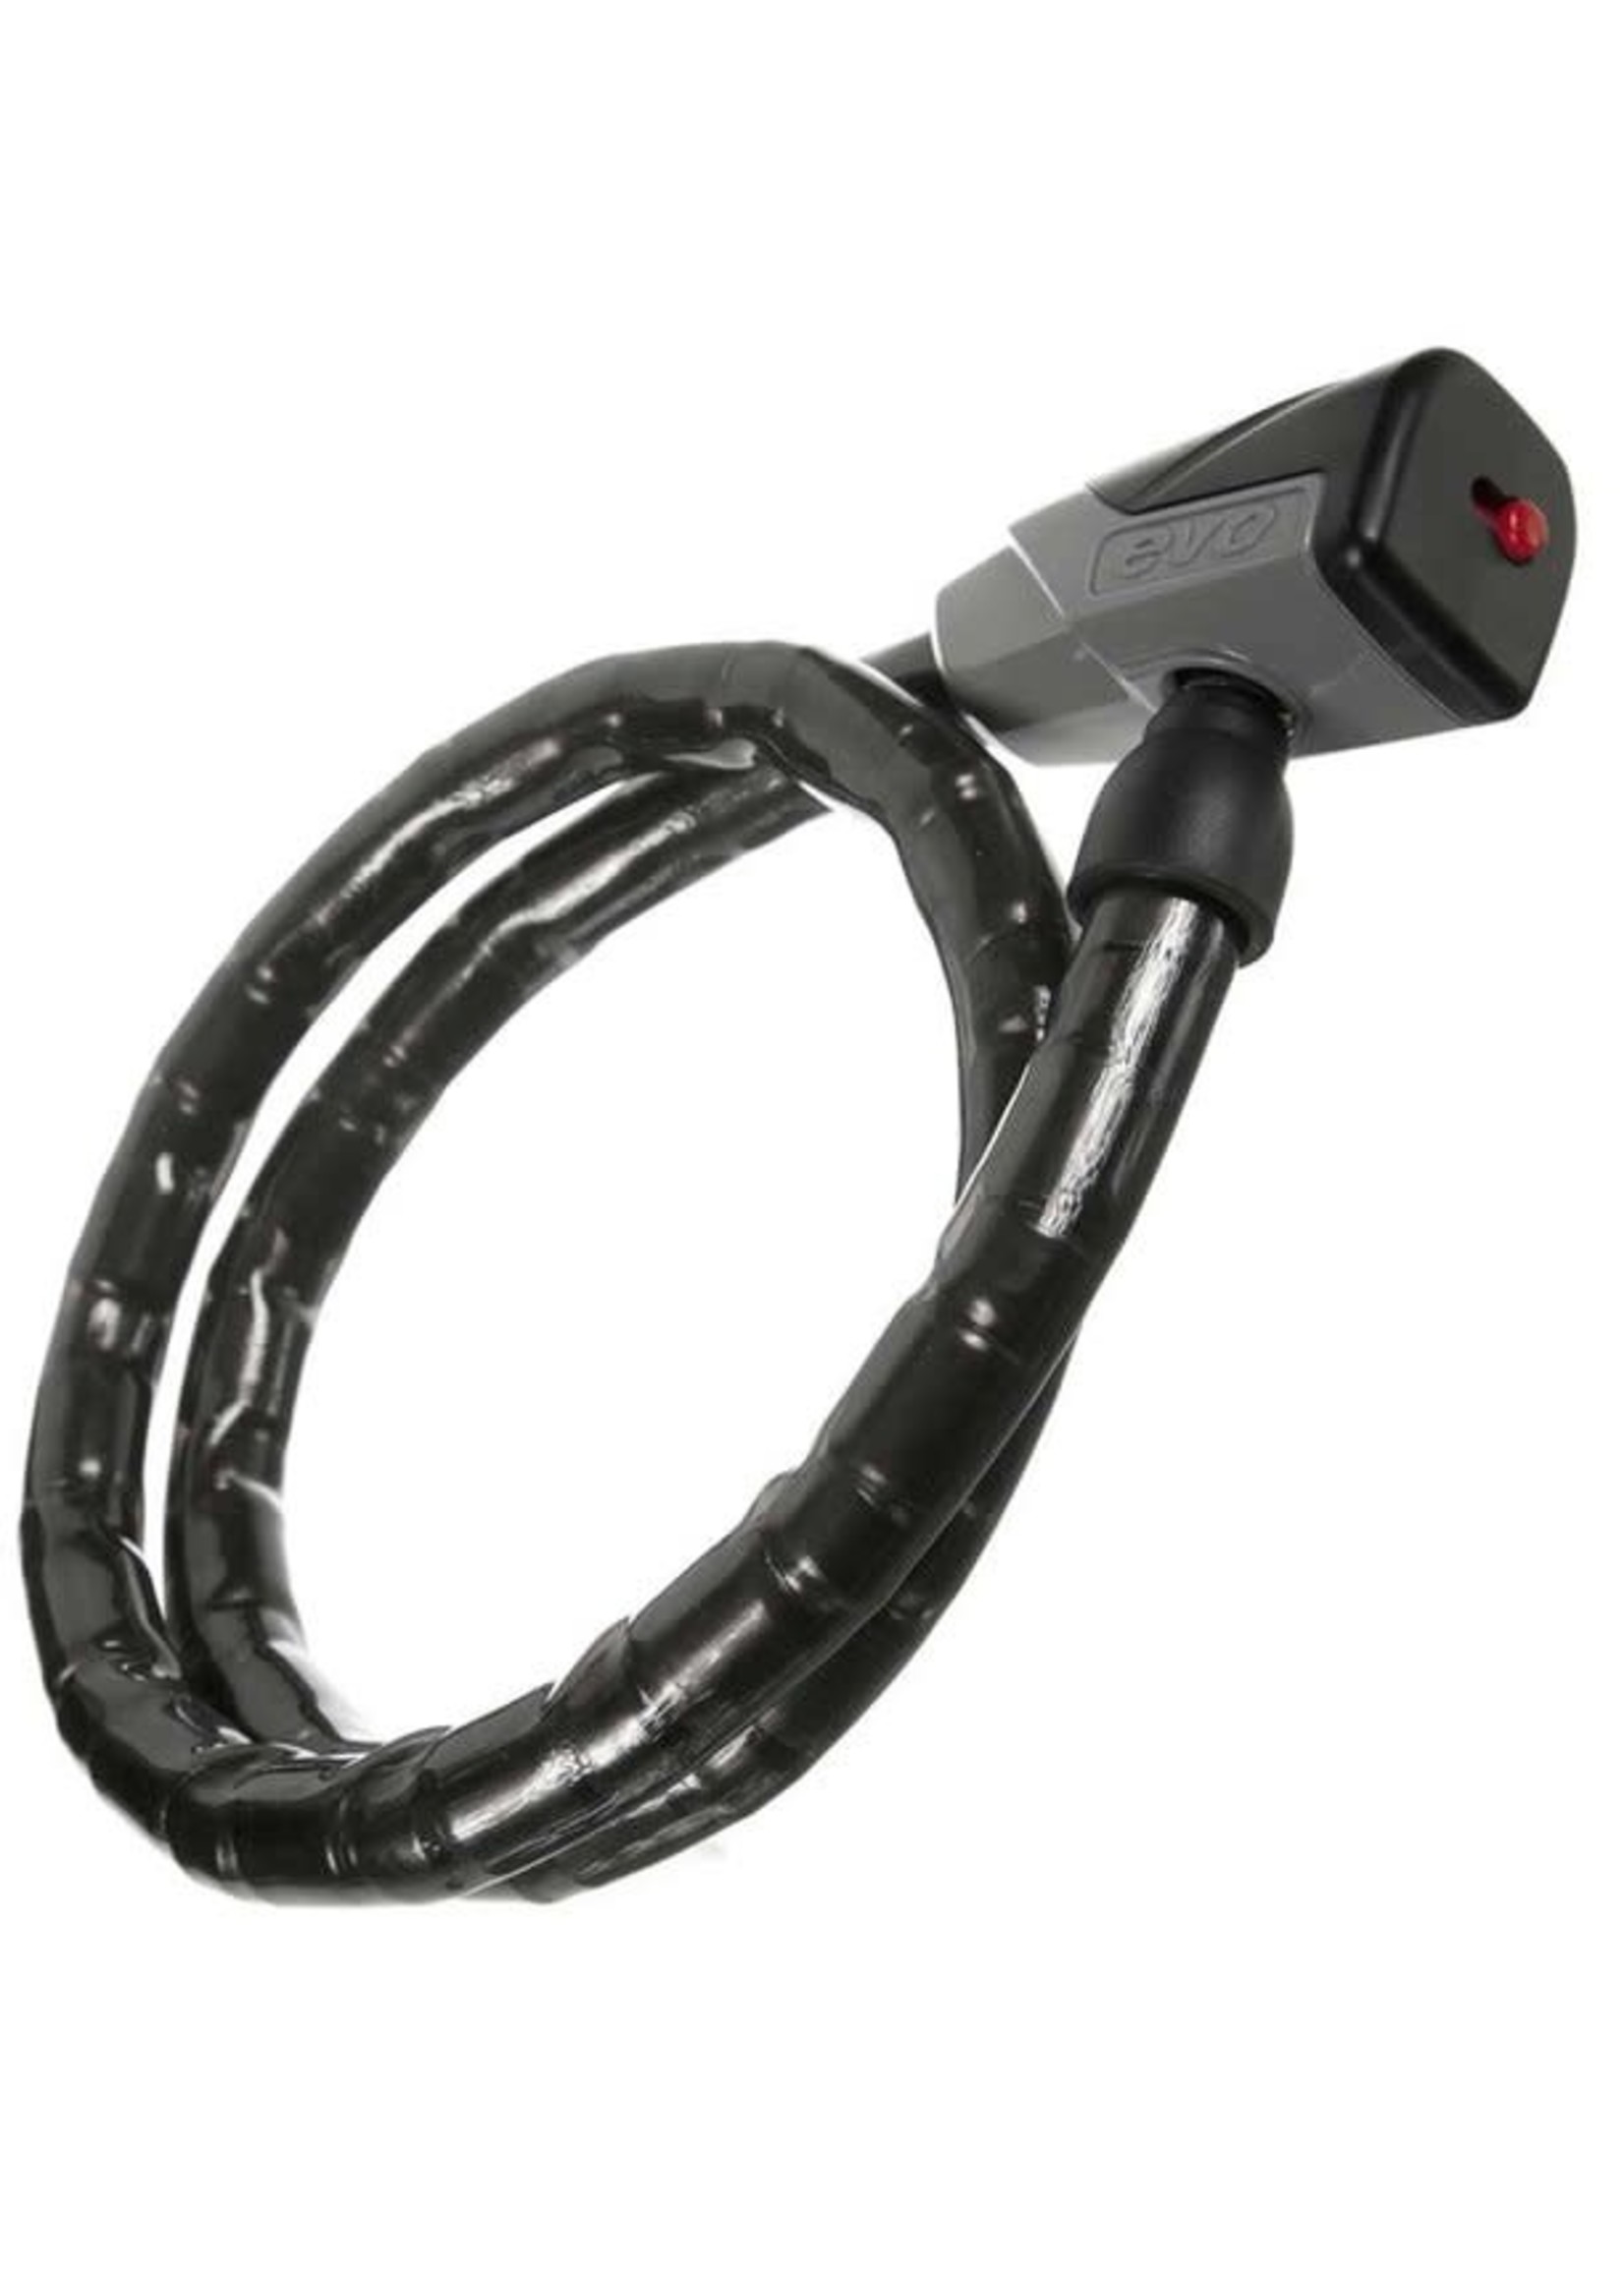 EVO EVO, Lockdown, Armored cable, Key, 18mm, 100cm, 39", Black